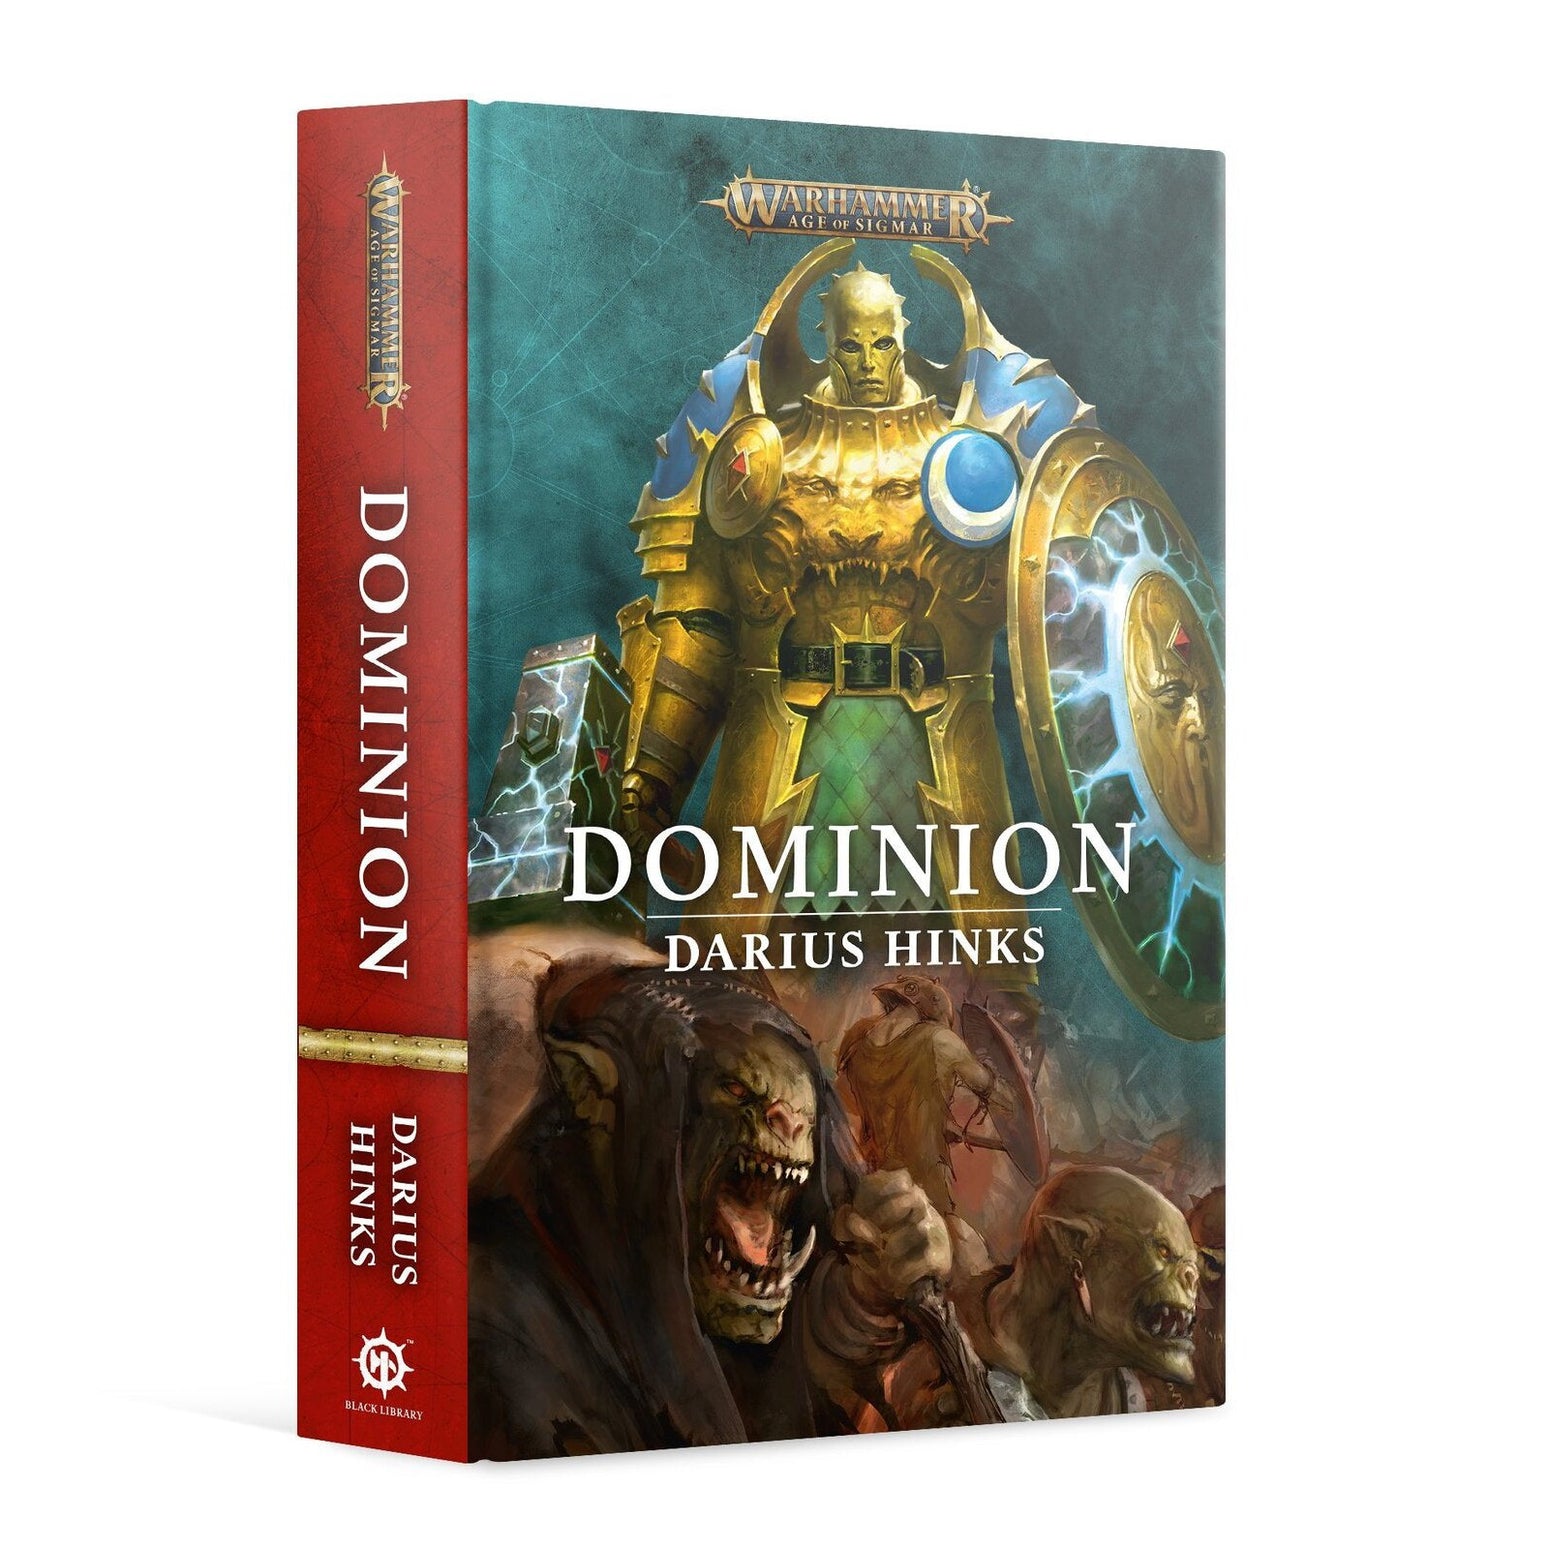 Warhammer Ages of Sigma Dominion Darius Hinks Hardcover